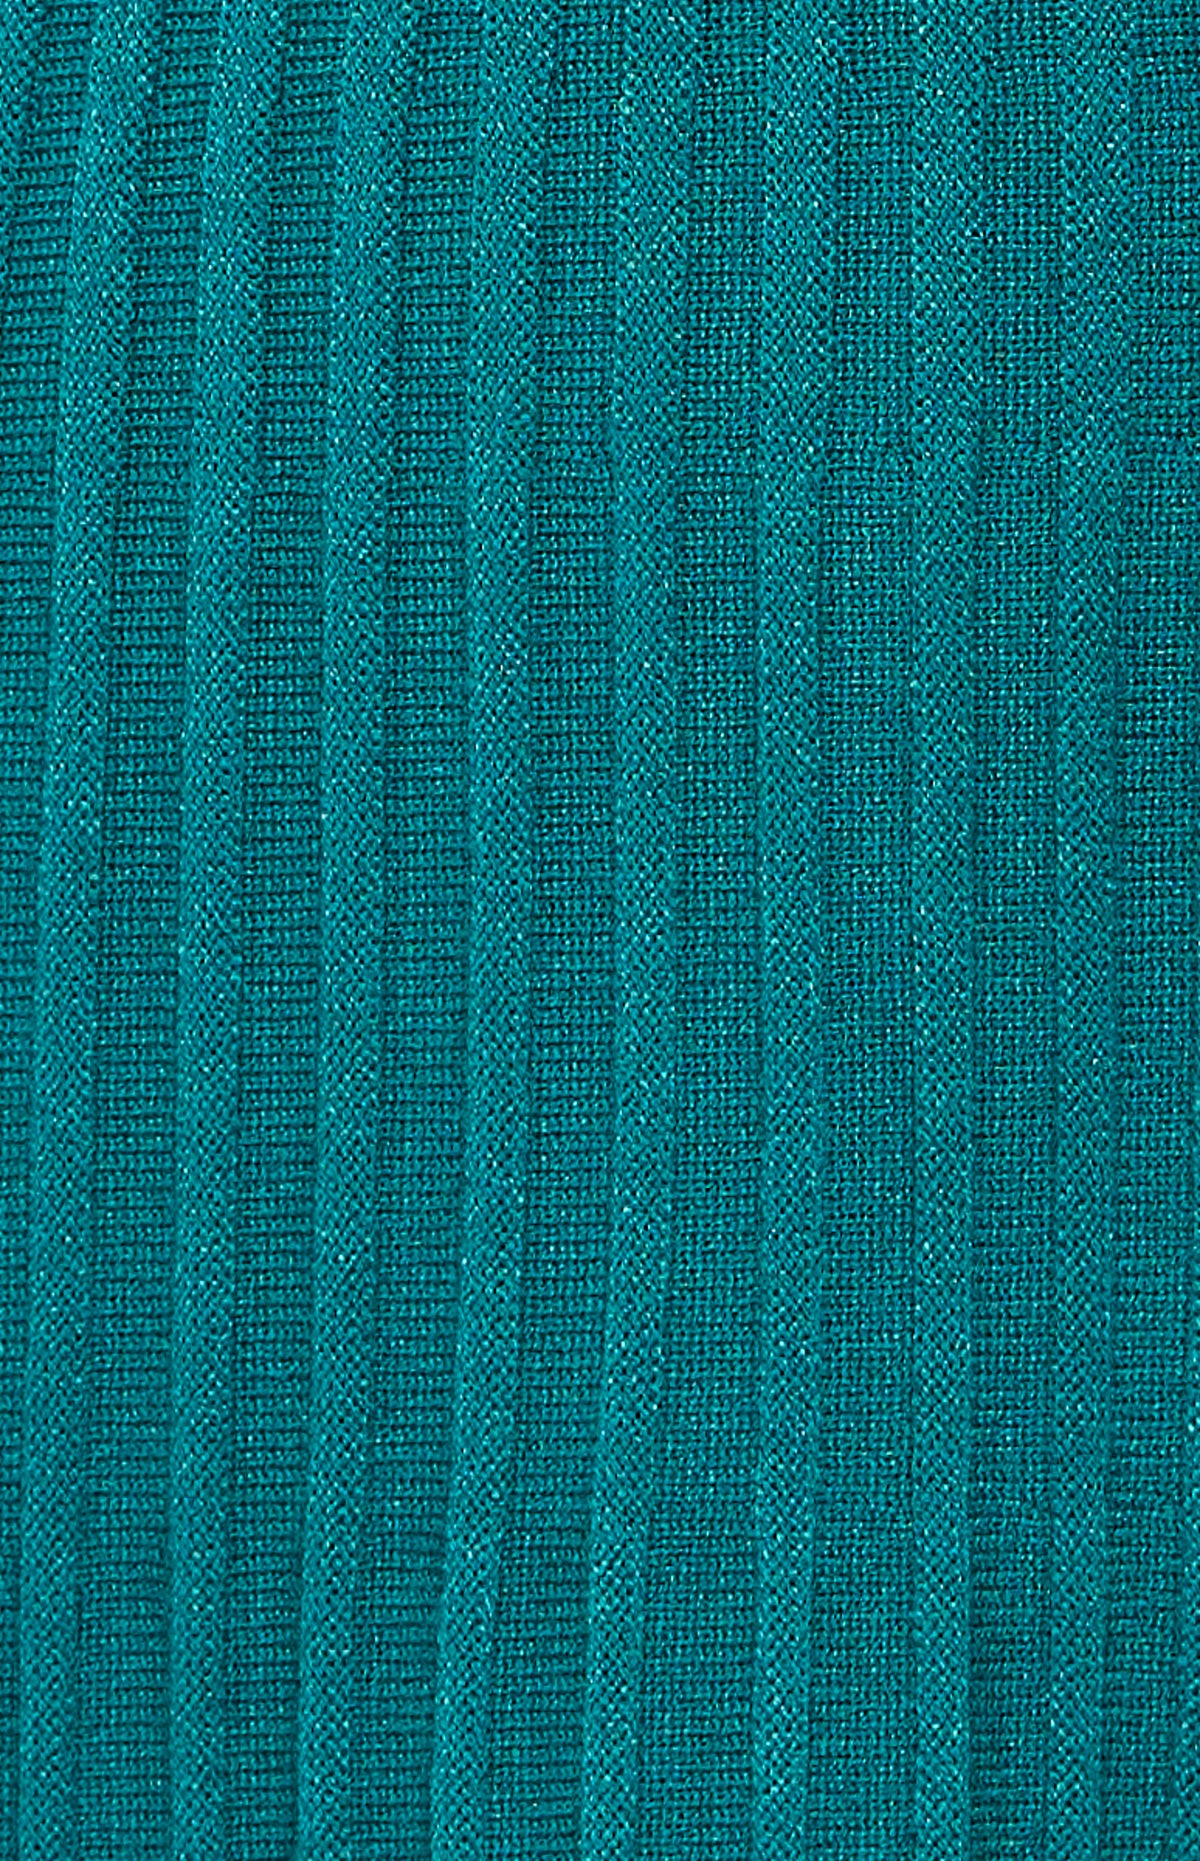 Tildy Long Sleeve, Ribbed Knit Mini Dress - Emerald